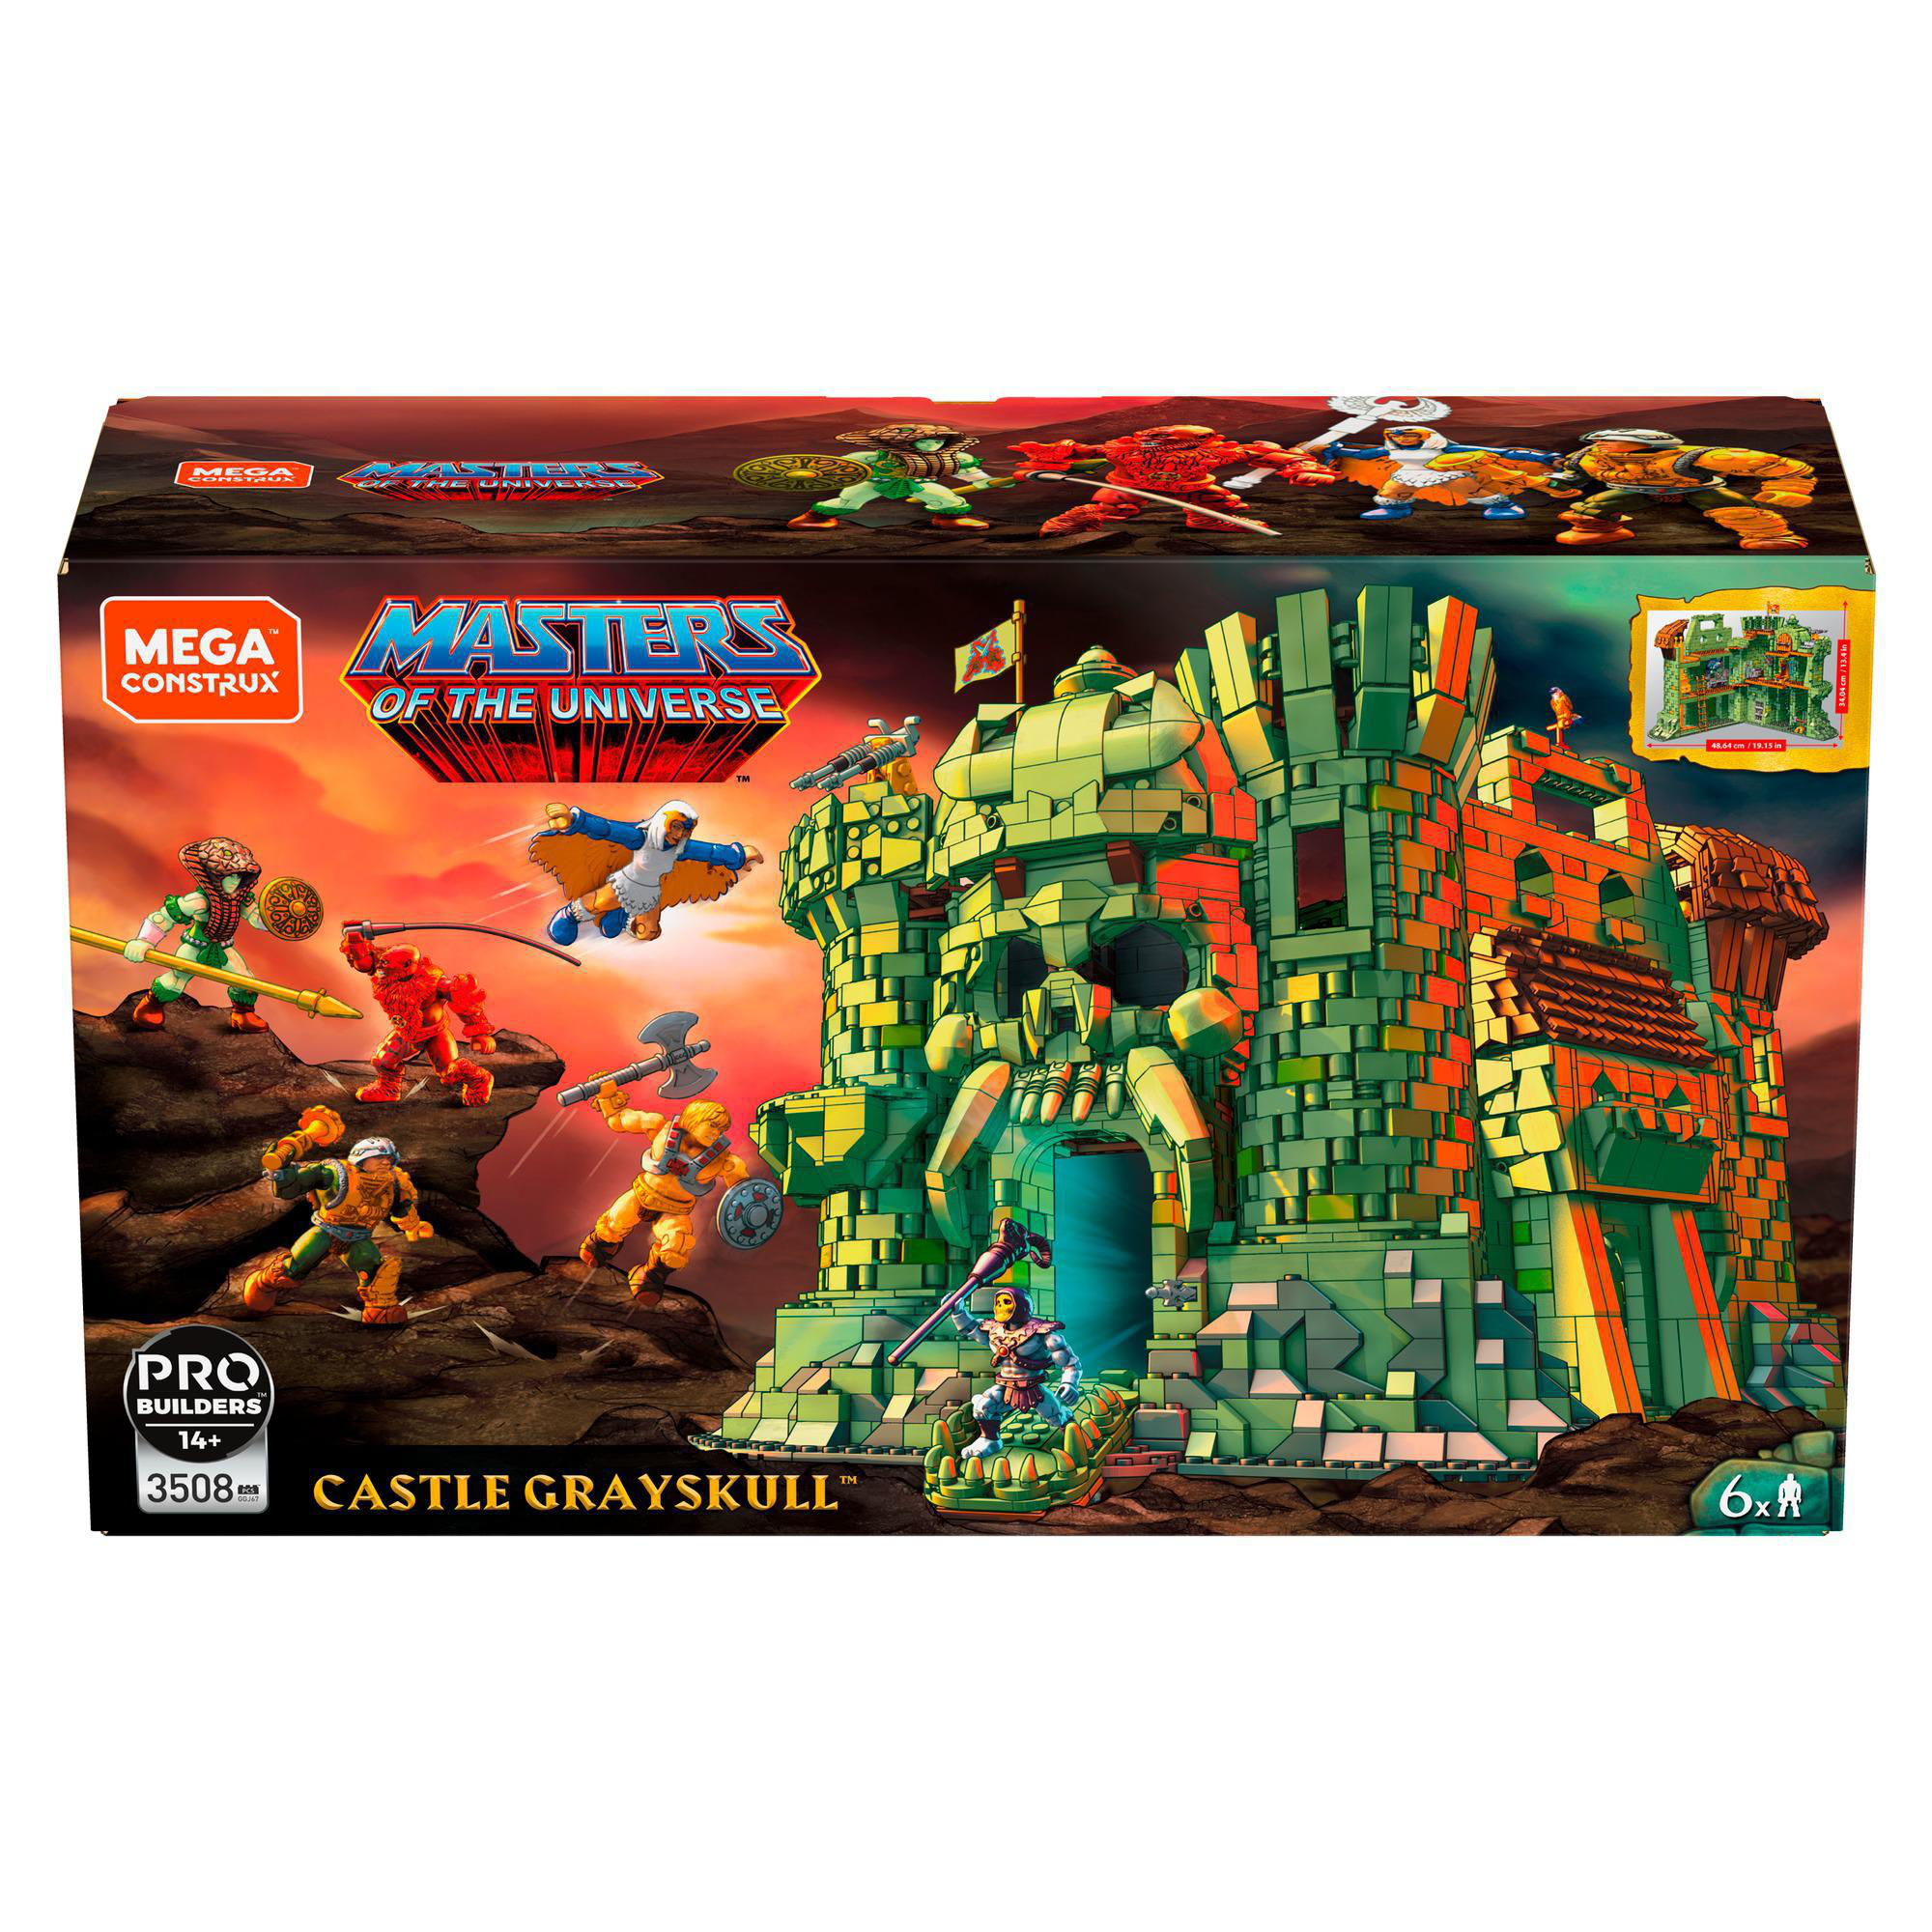 Grayskull Spielset of MEGA CONSTRUX Masters Castle Mehrfarbig the Universe